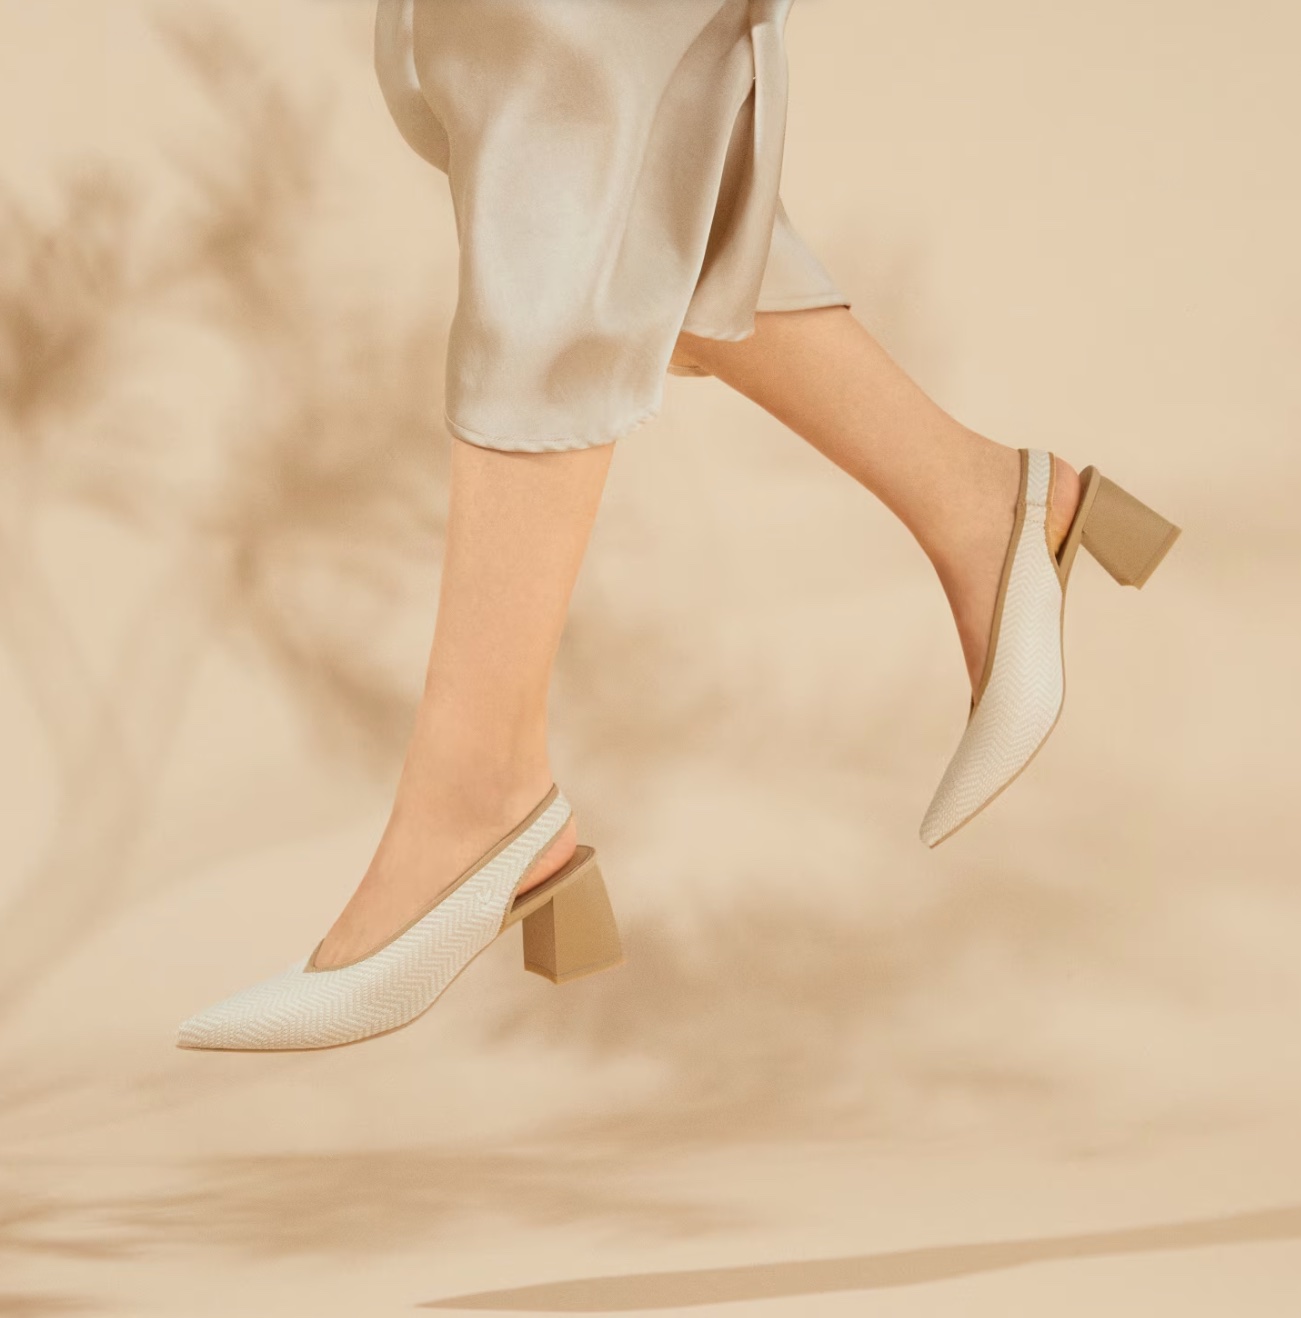 A pair of feet wearing cream and tan block heeled sandals jump.